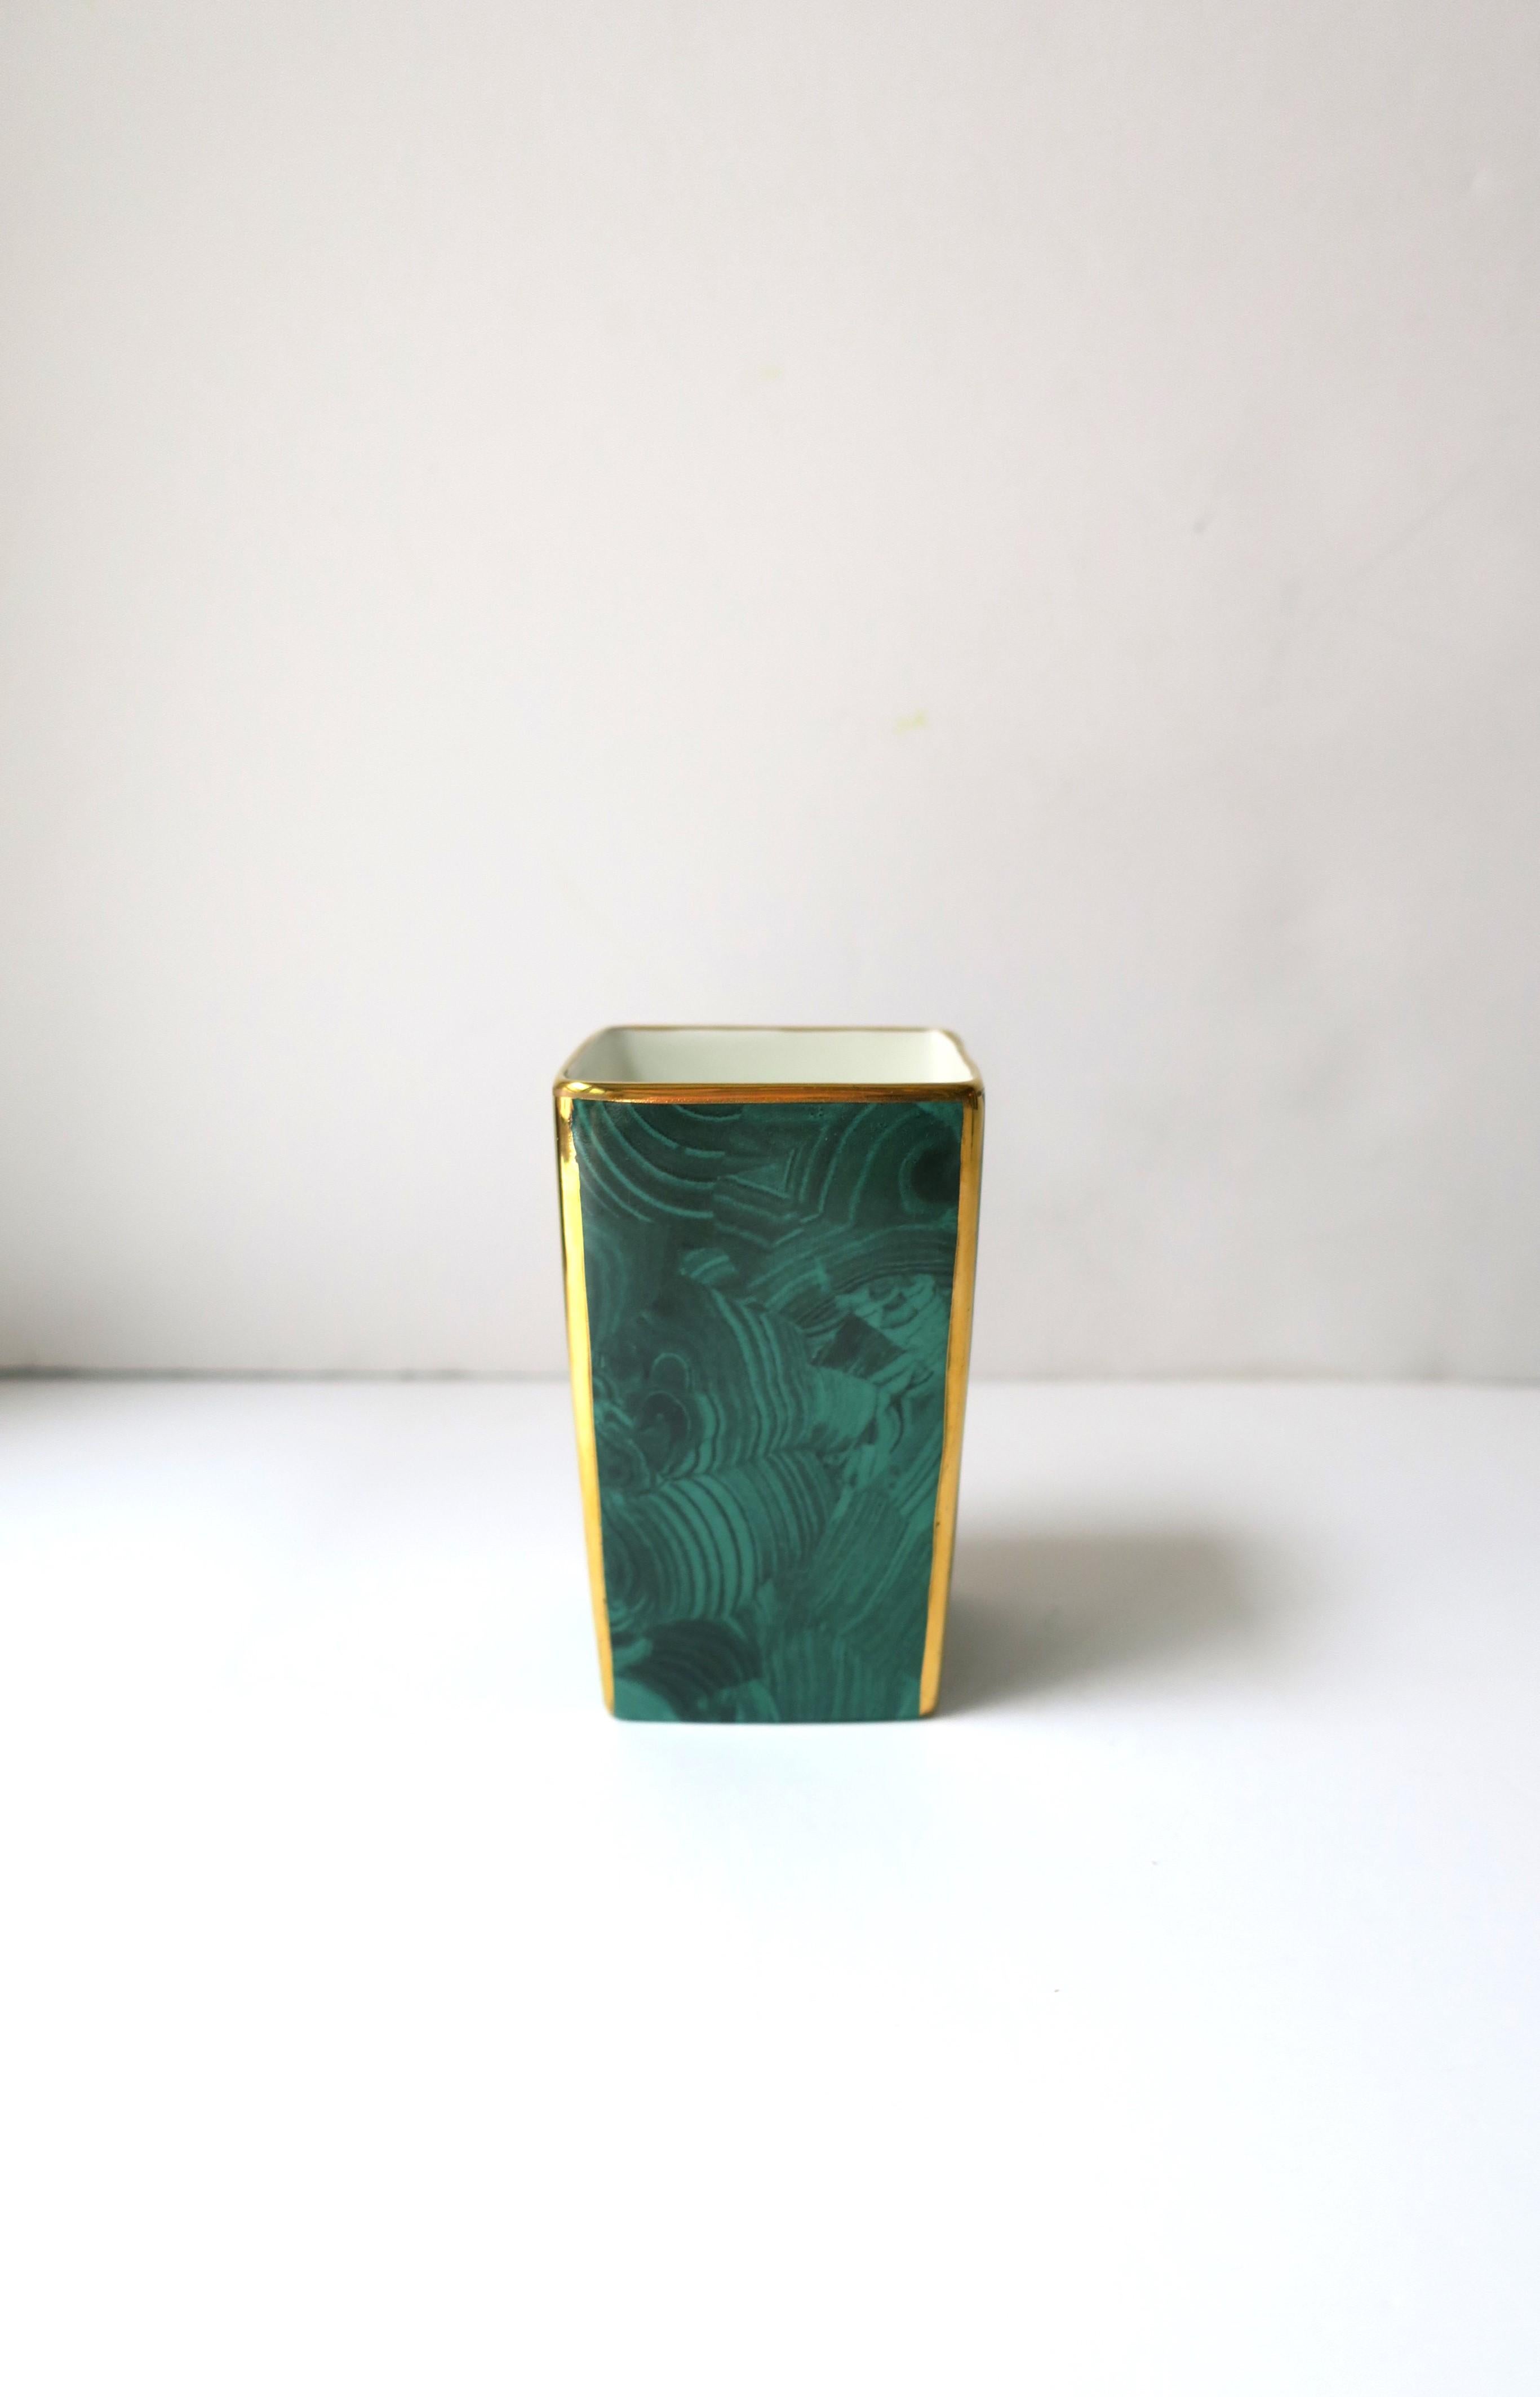 Malachite and Gold Porcelain Desk Pen or Vanity Holders, or Vases, England, Pair 8